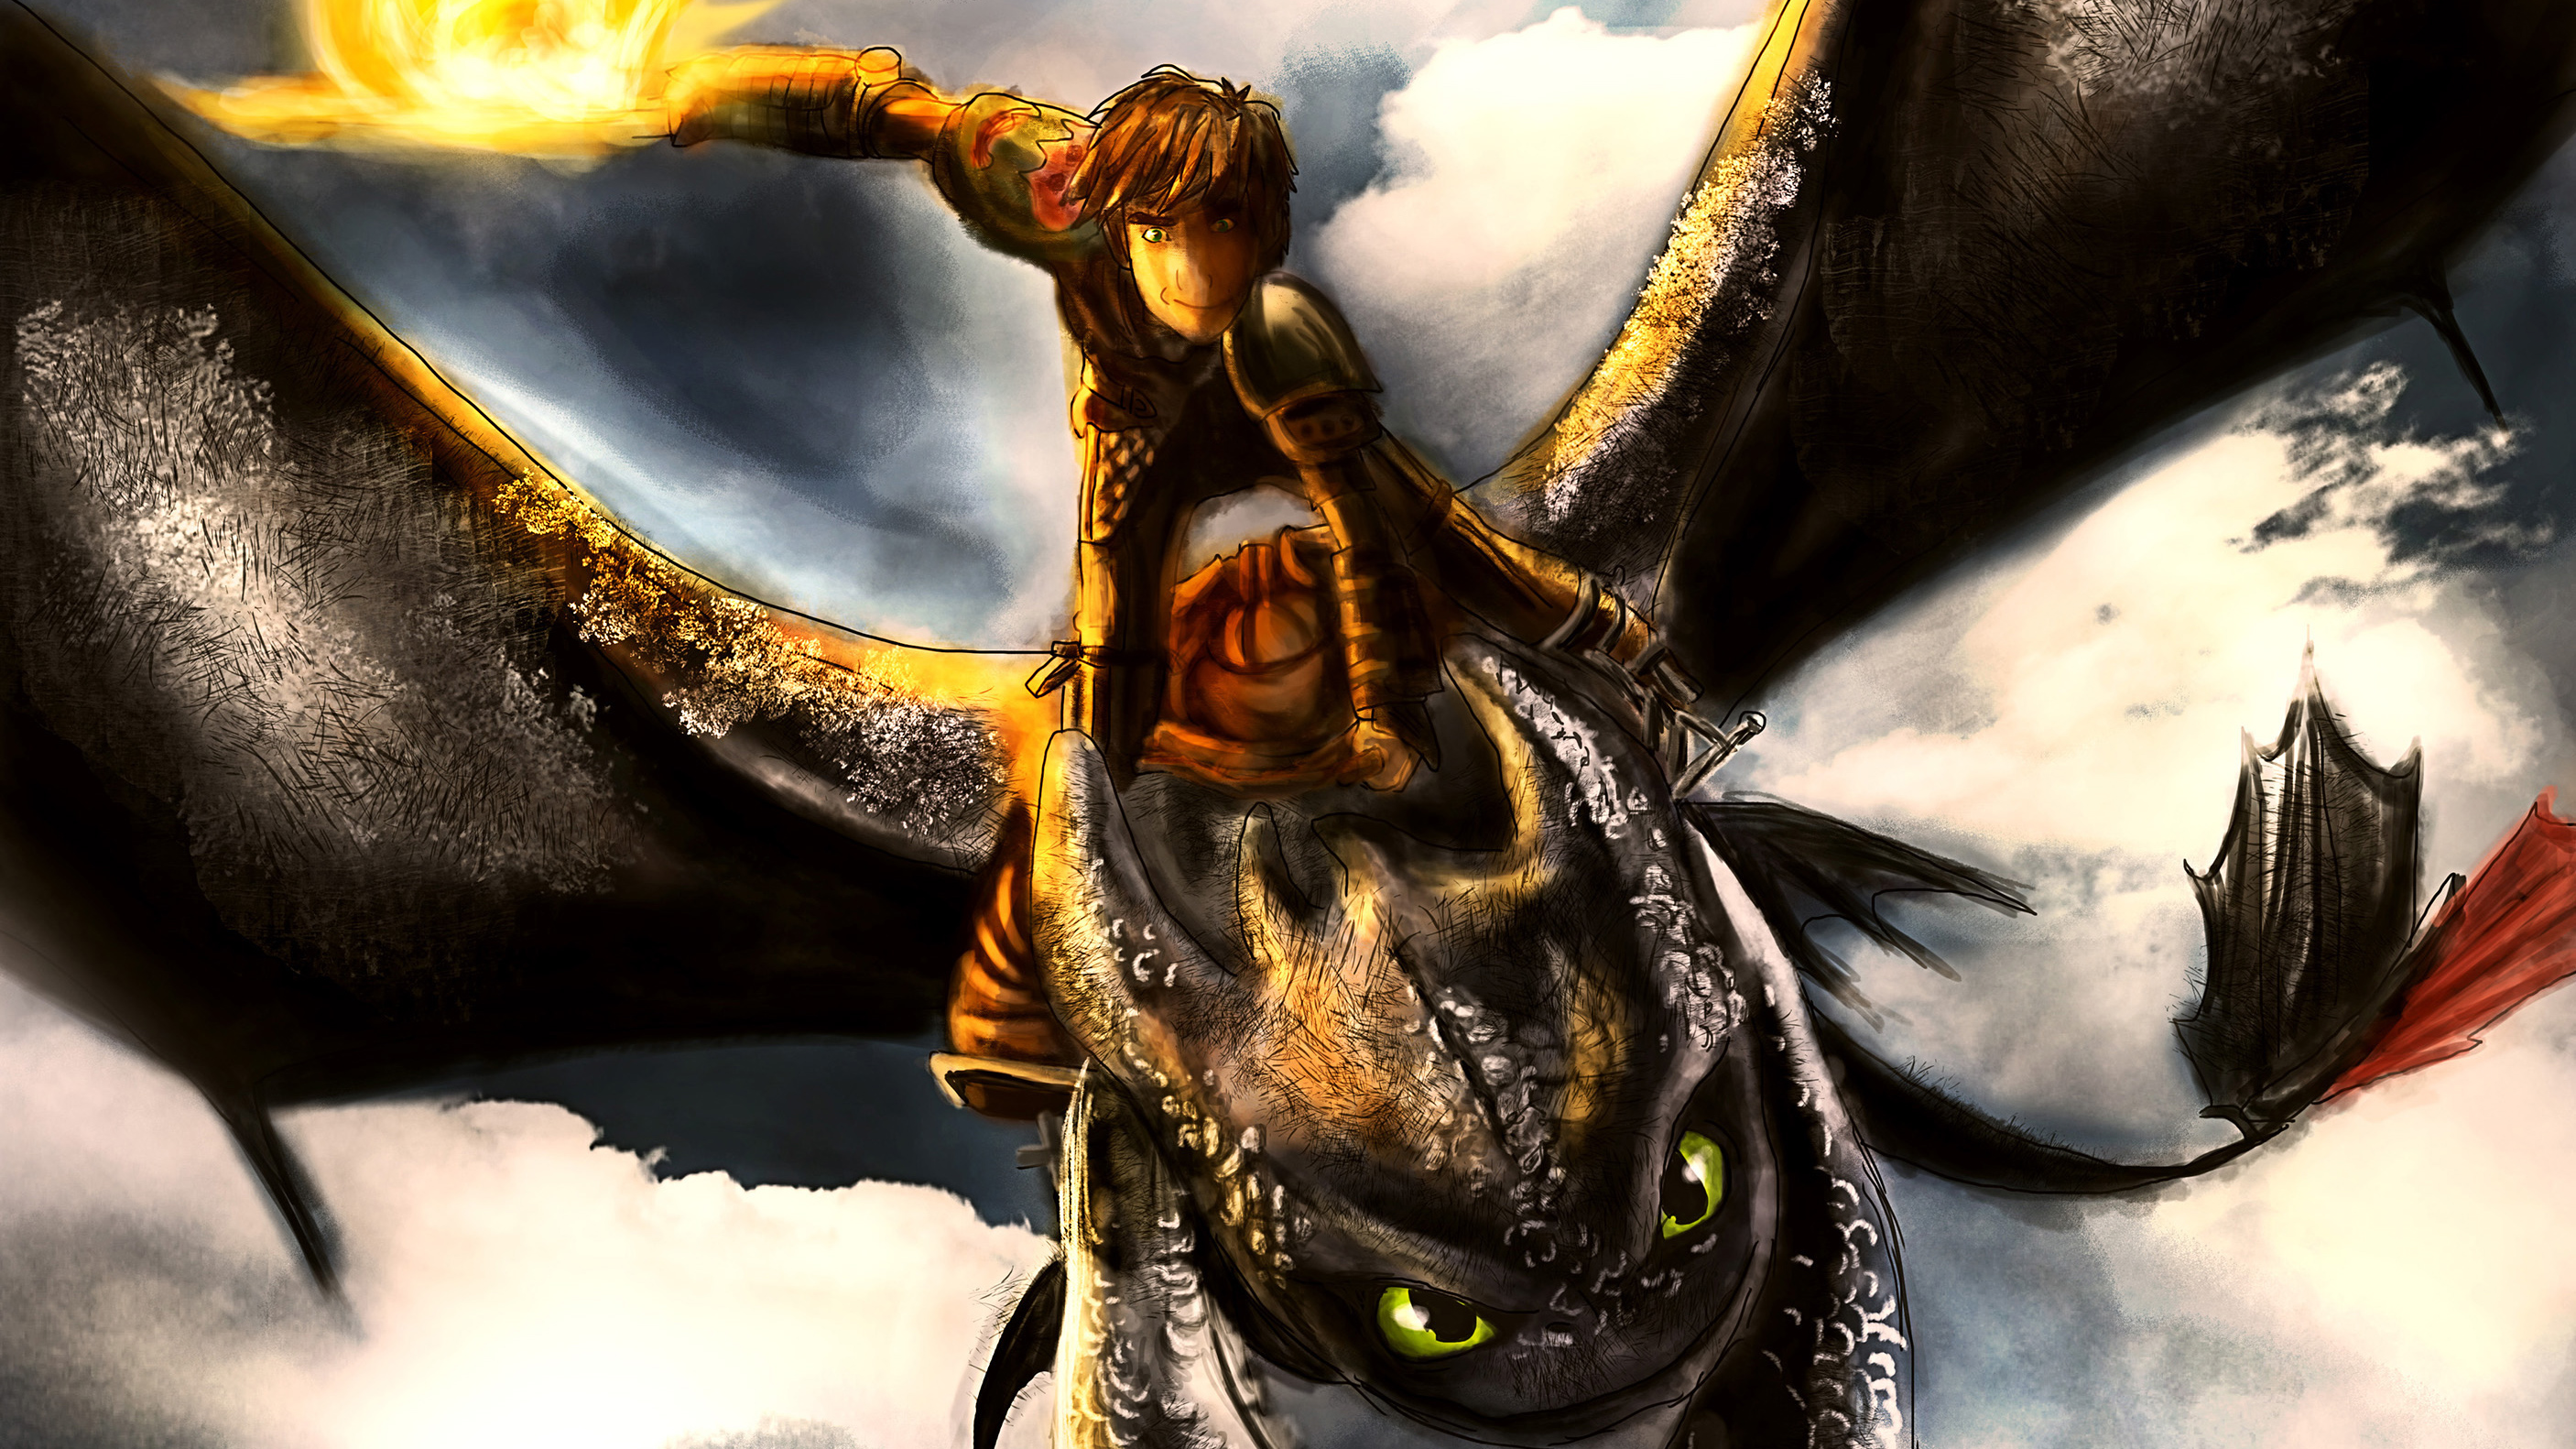 dragon hd wallpapers 1366x768,cg artwork,dragon,demon,fictional character,mythical creature